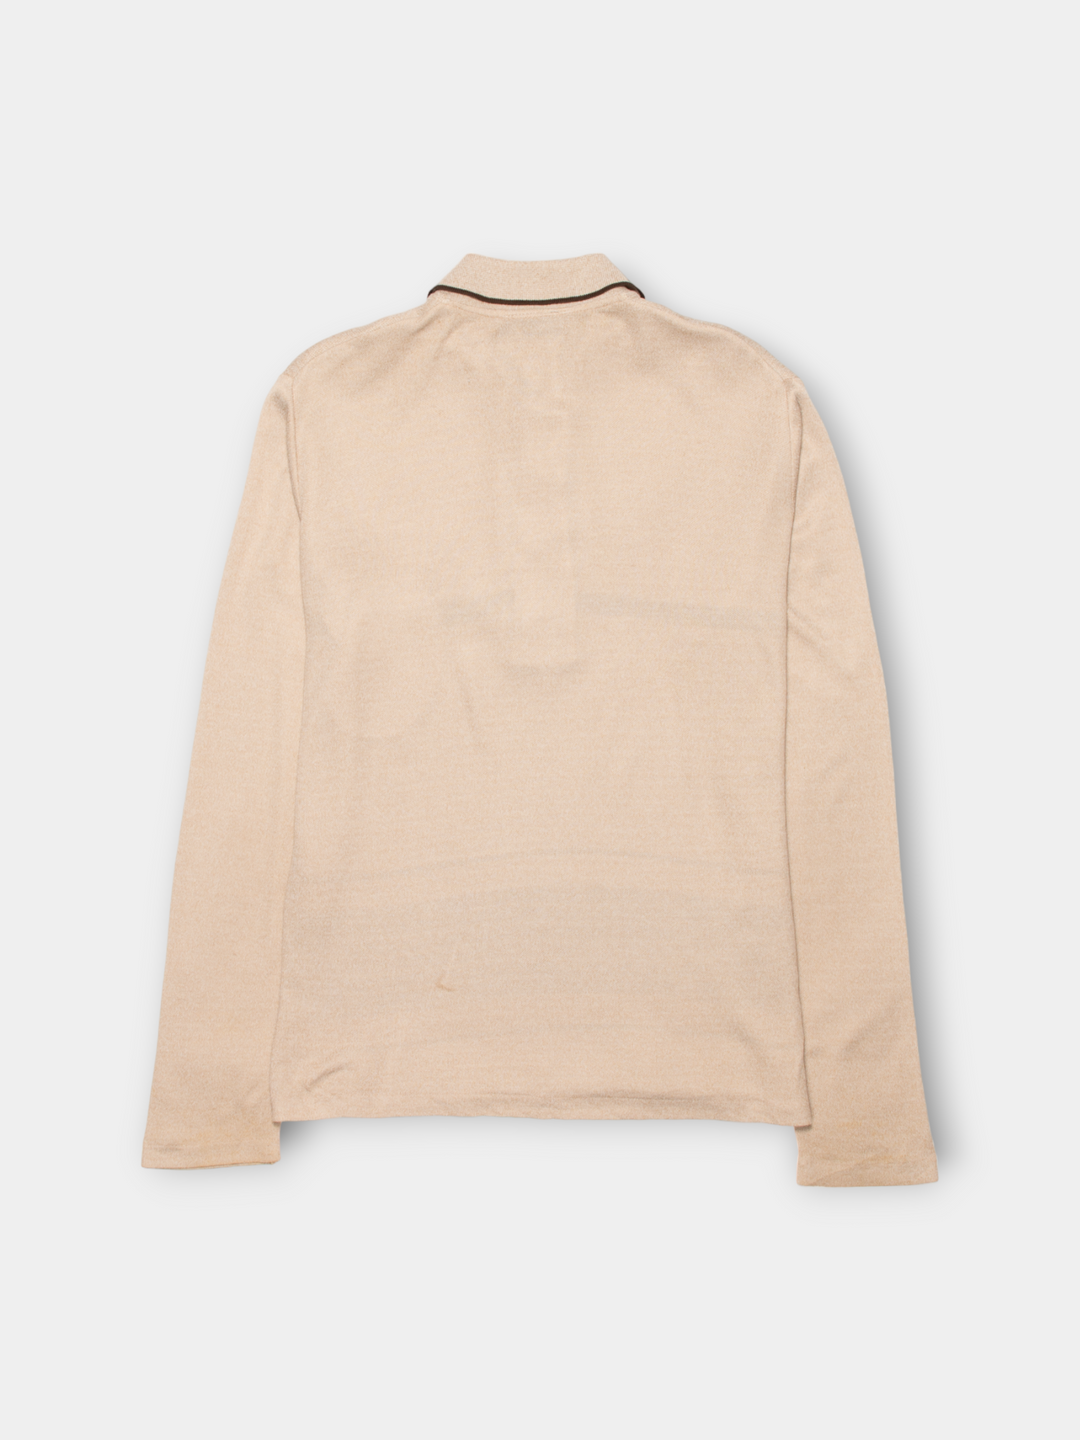 70s Sears Sweater (M)